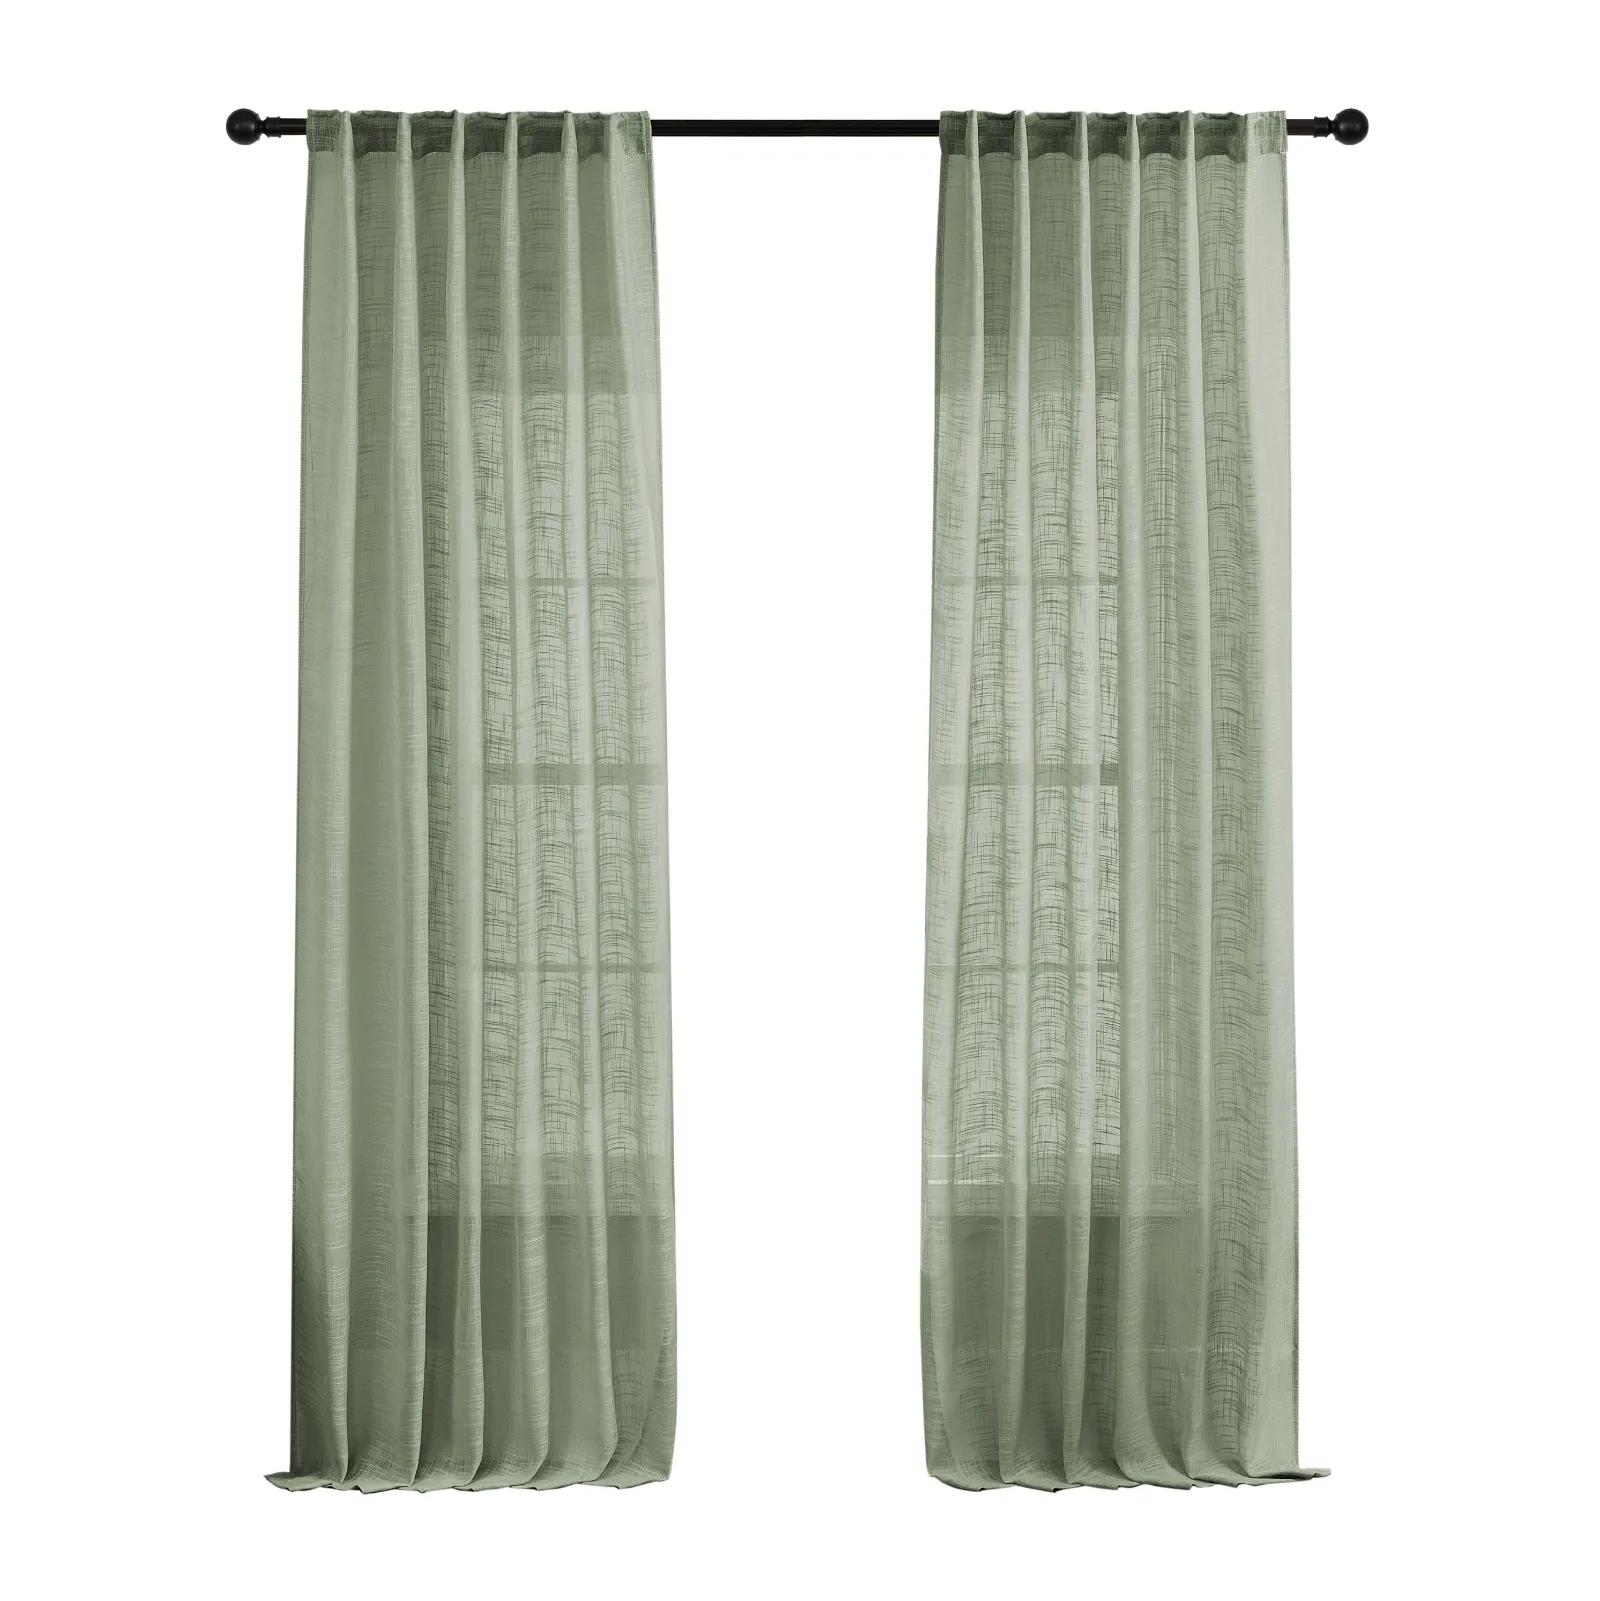 slap-up Green Curtains With Rod Pocket Semi Sheer Curtain Drapes Elegant Casual Linen Textured Window Draperies